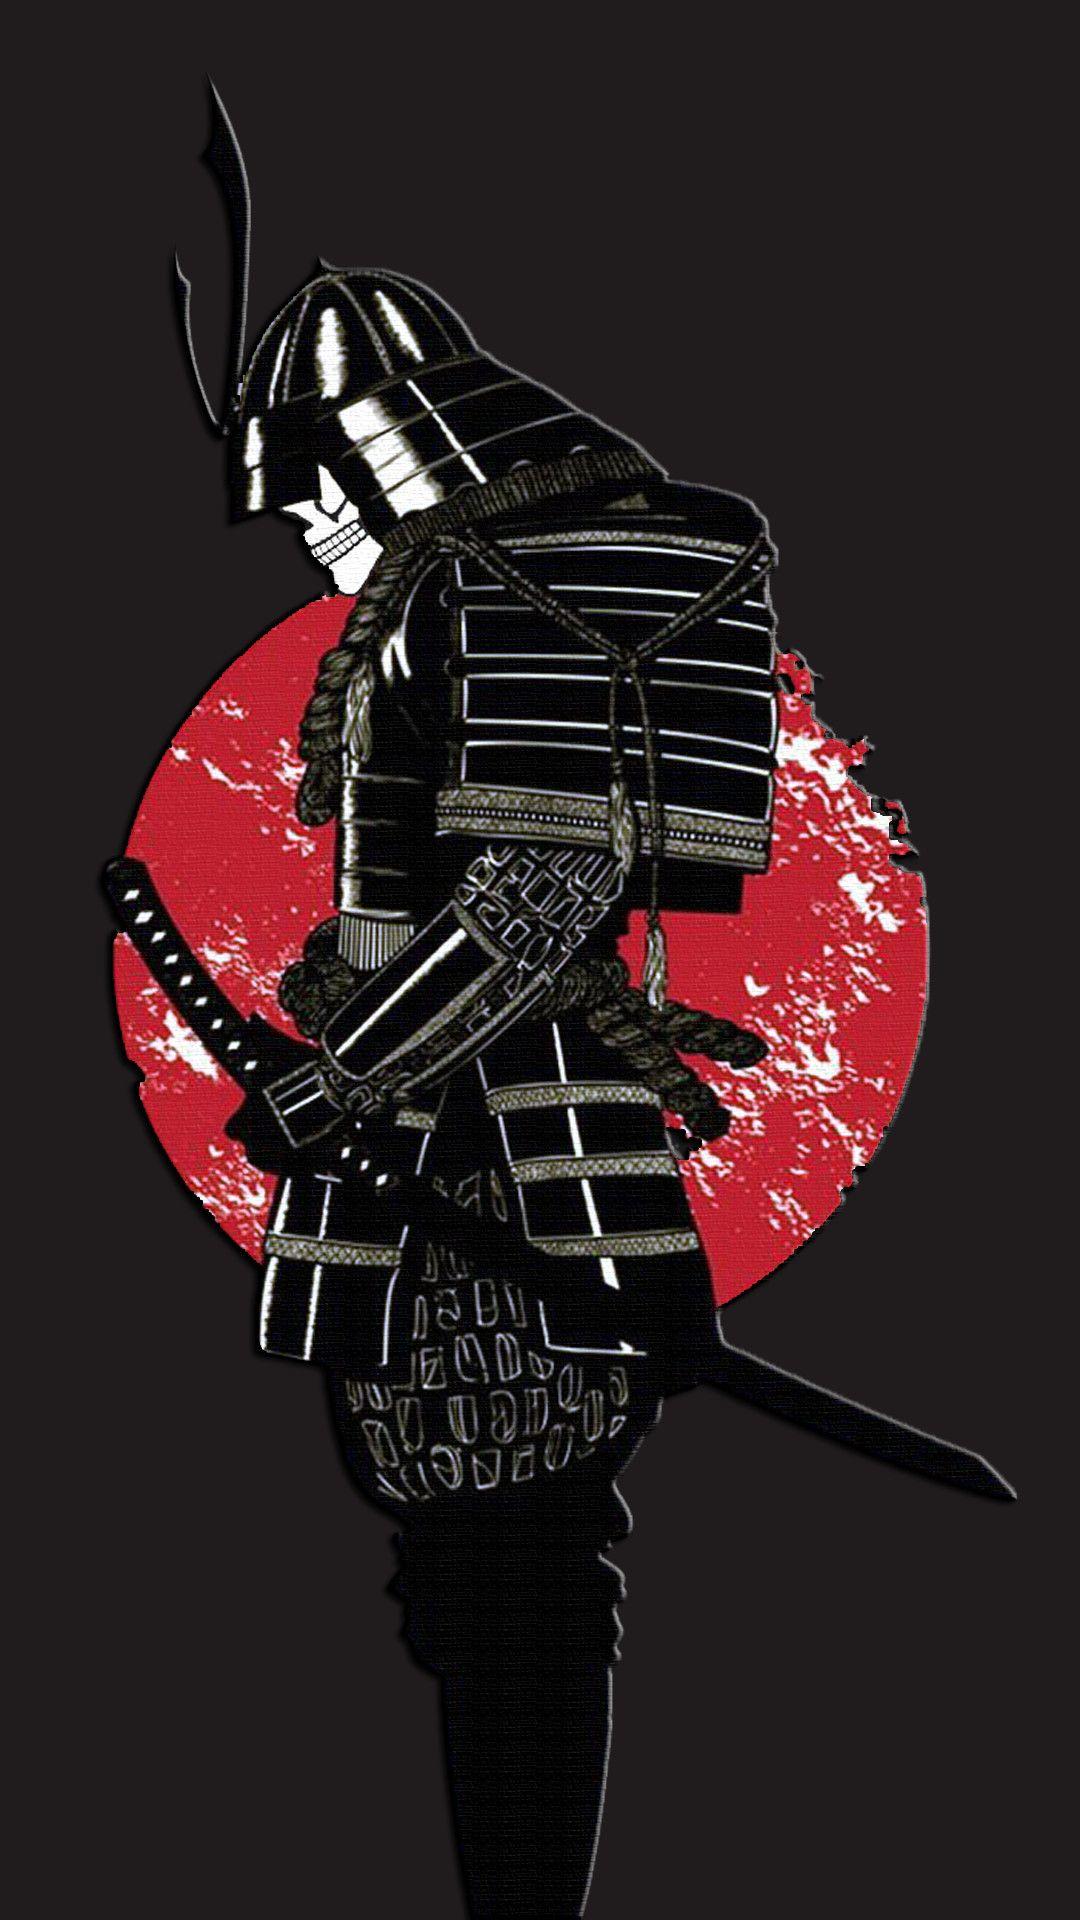 Yakuza 5 wallpaper by Betka on DeviantArt